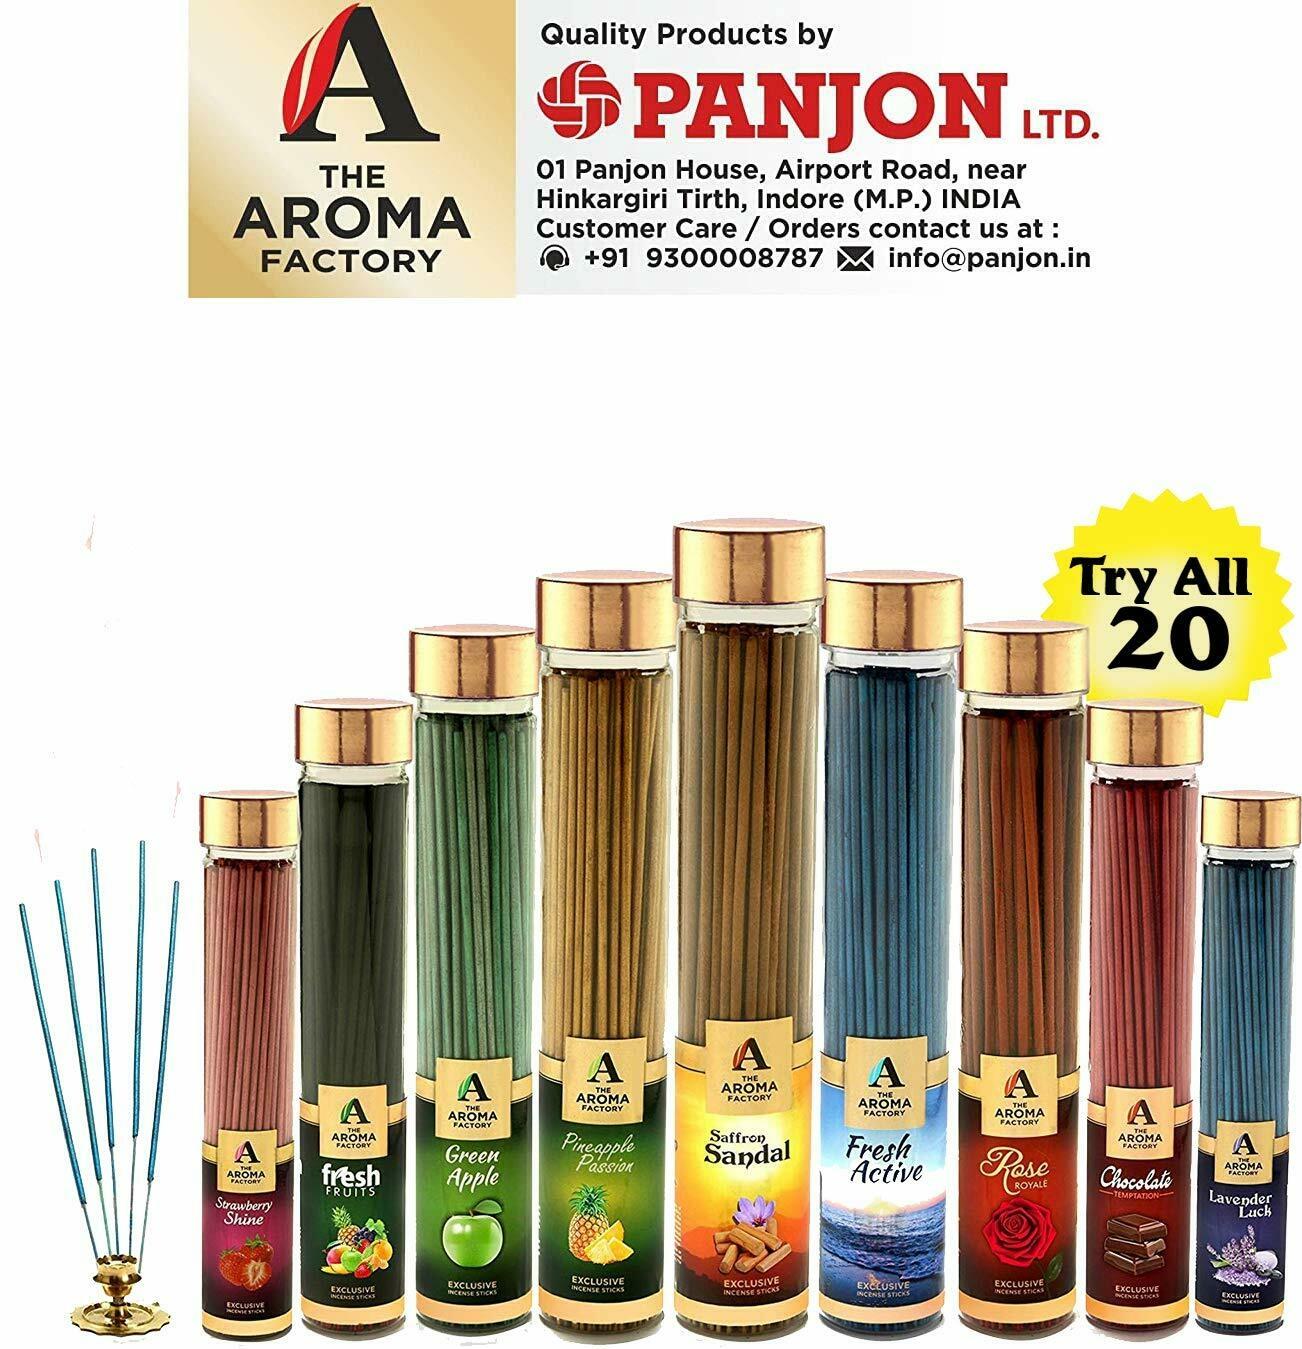 3 Packs Original Tulasi Green apple incense sticks great aroma bargain price! 